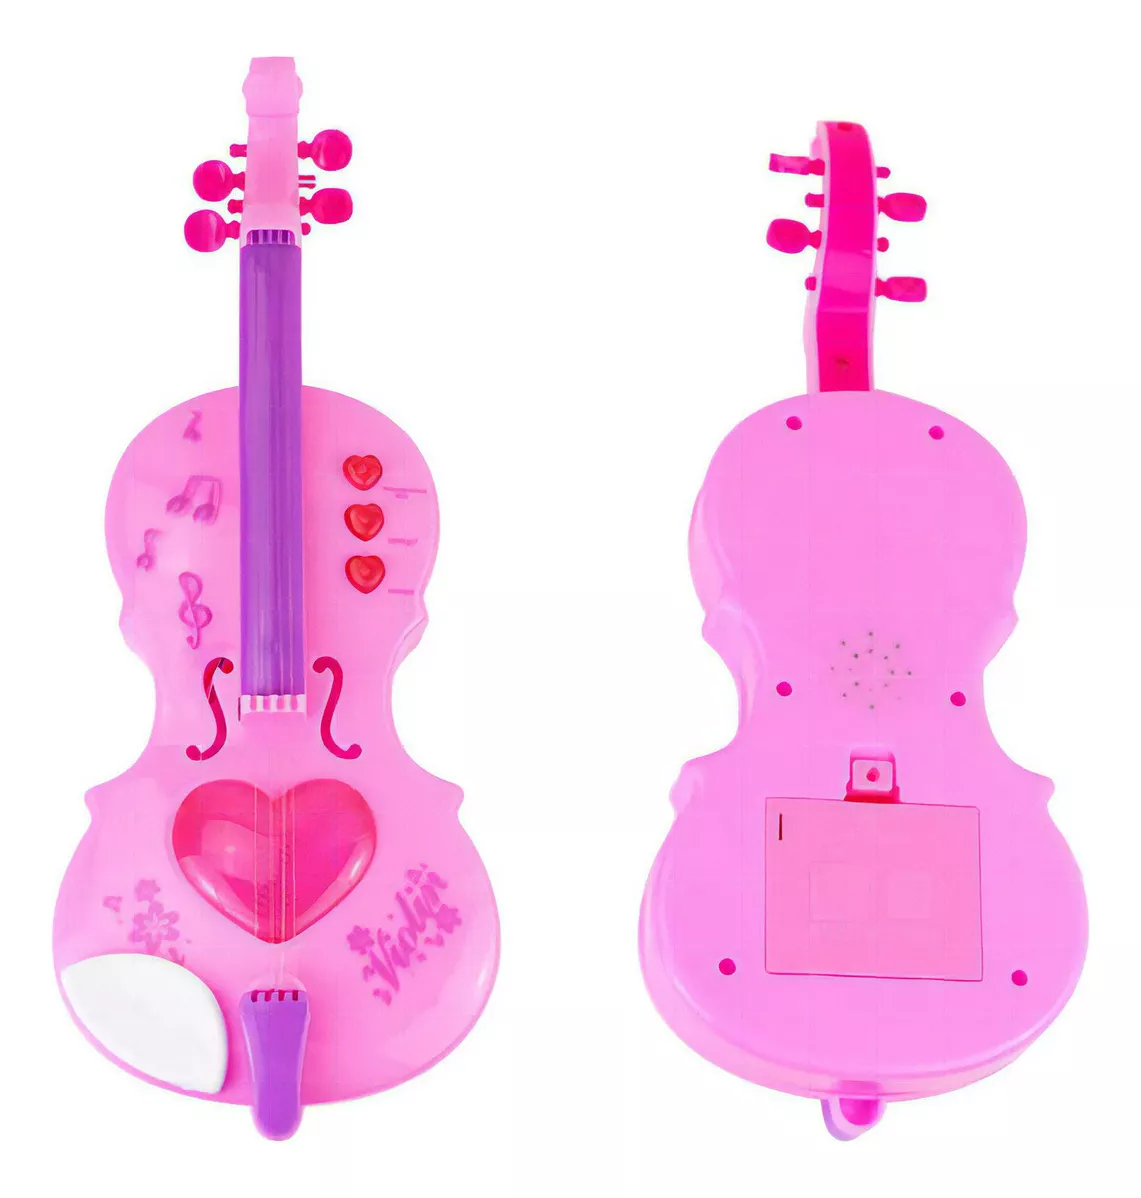 Tercera imagen para búsqueda de violin de juguete